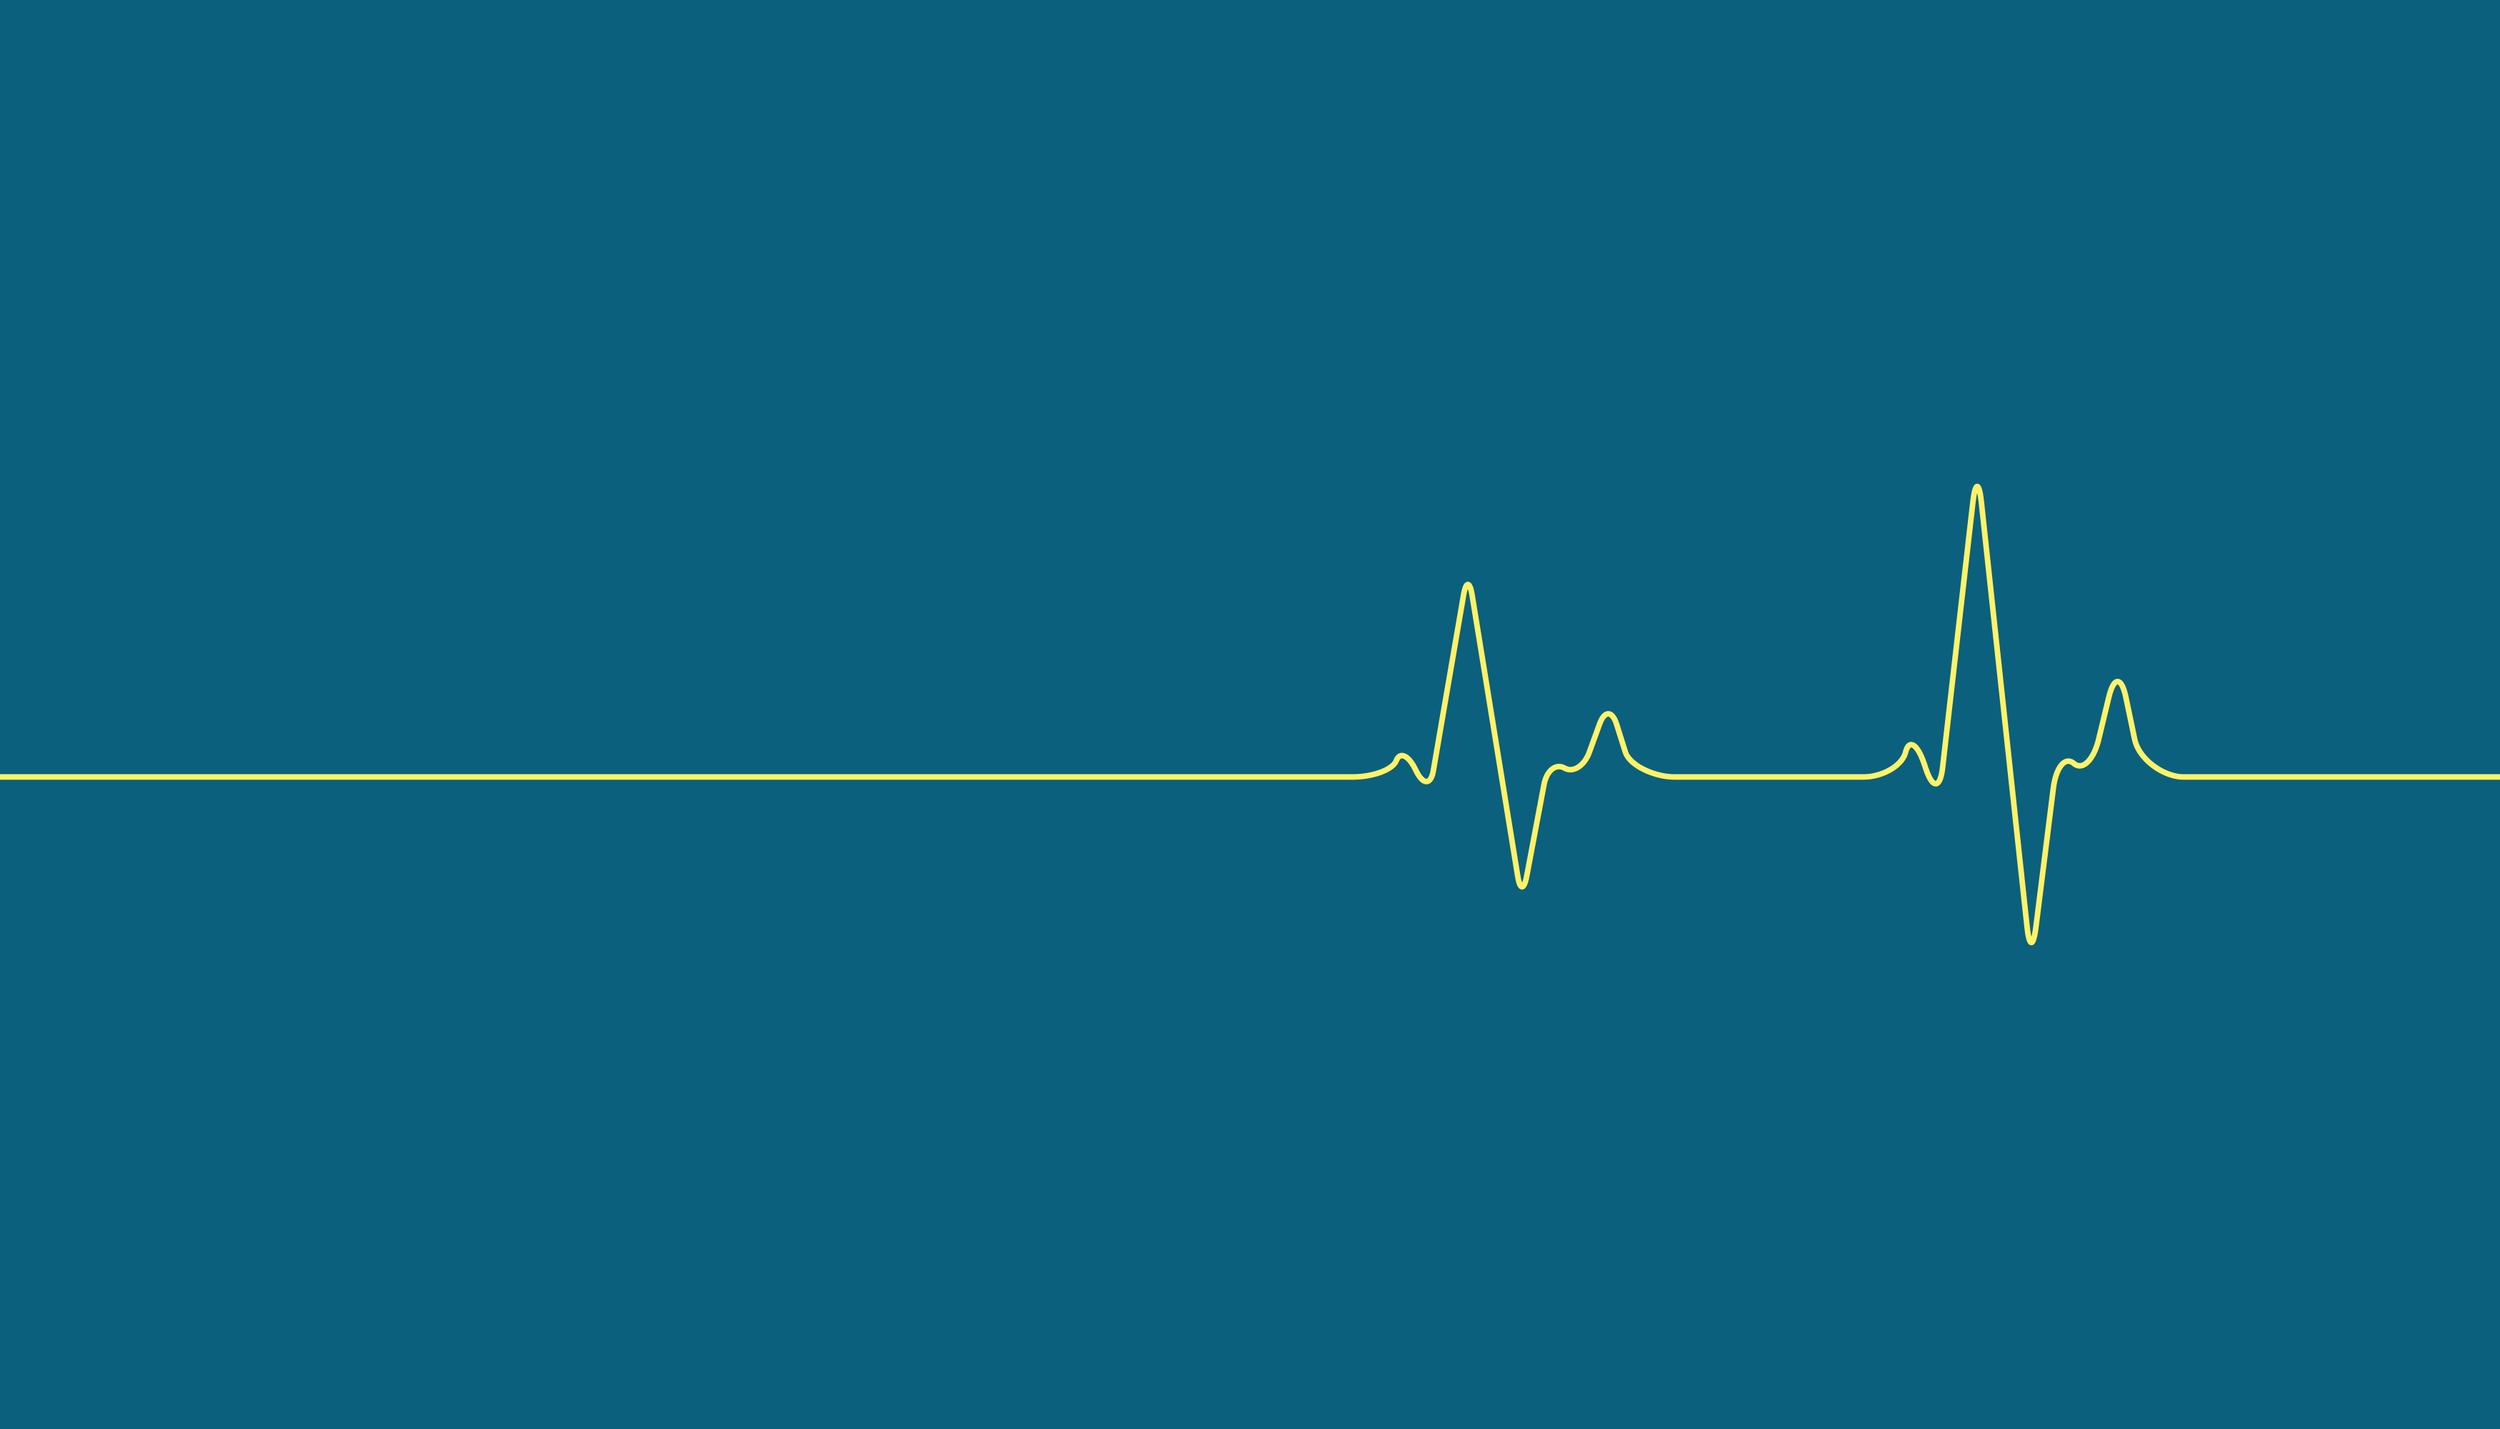 General 2500x1429 digital art minimalism simple background heartbeat blue background medicine abstract lines pulse EKG